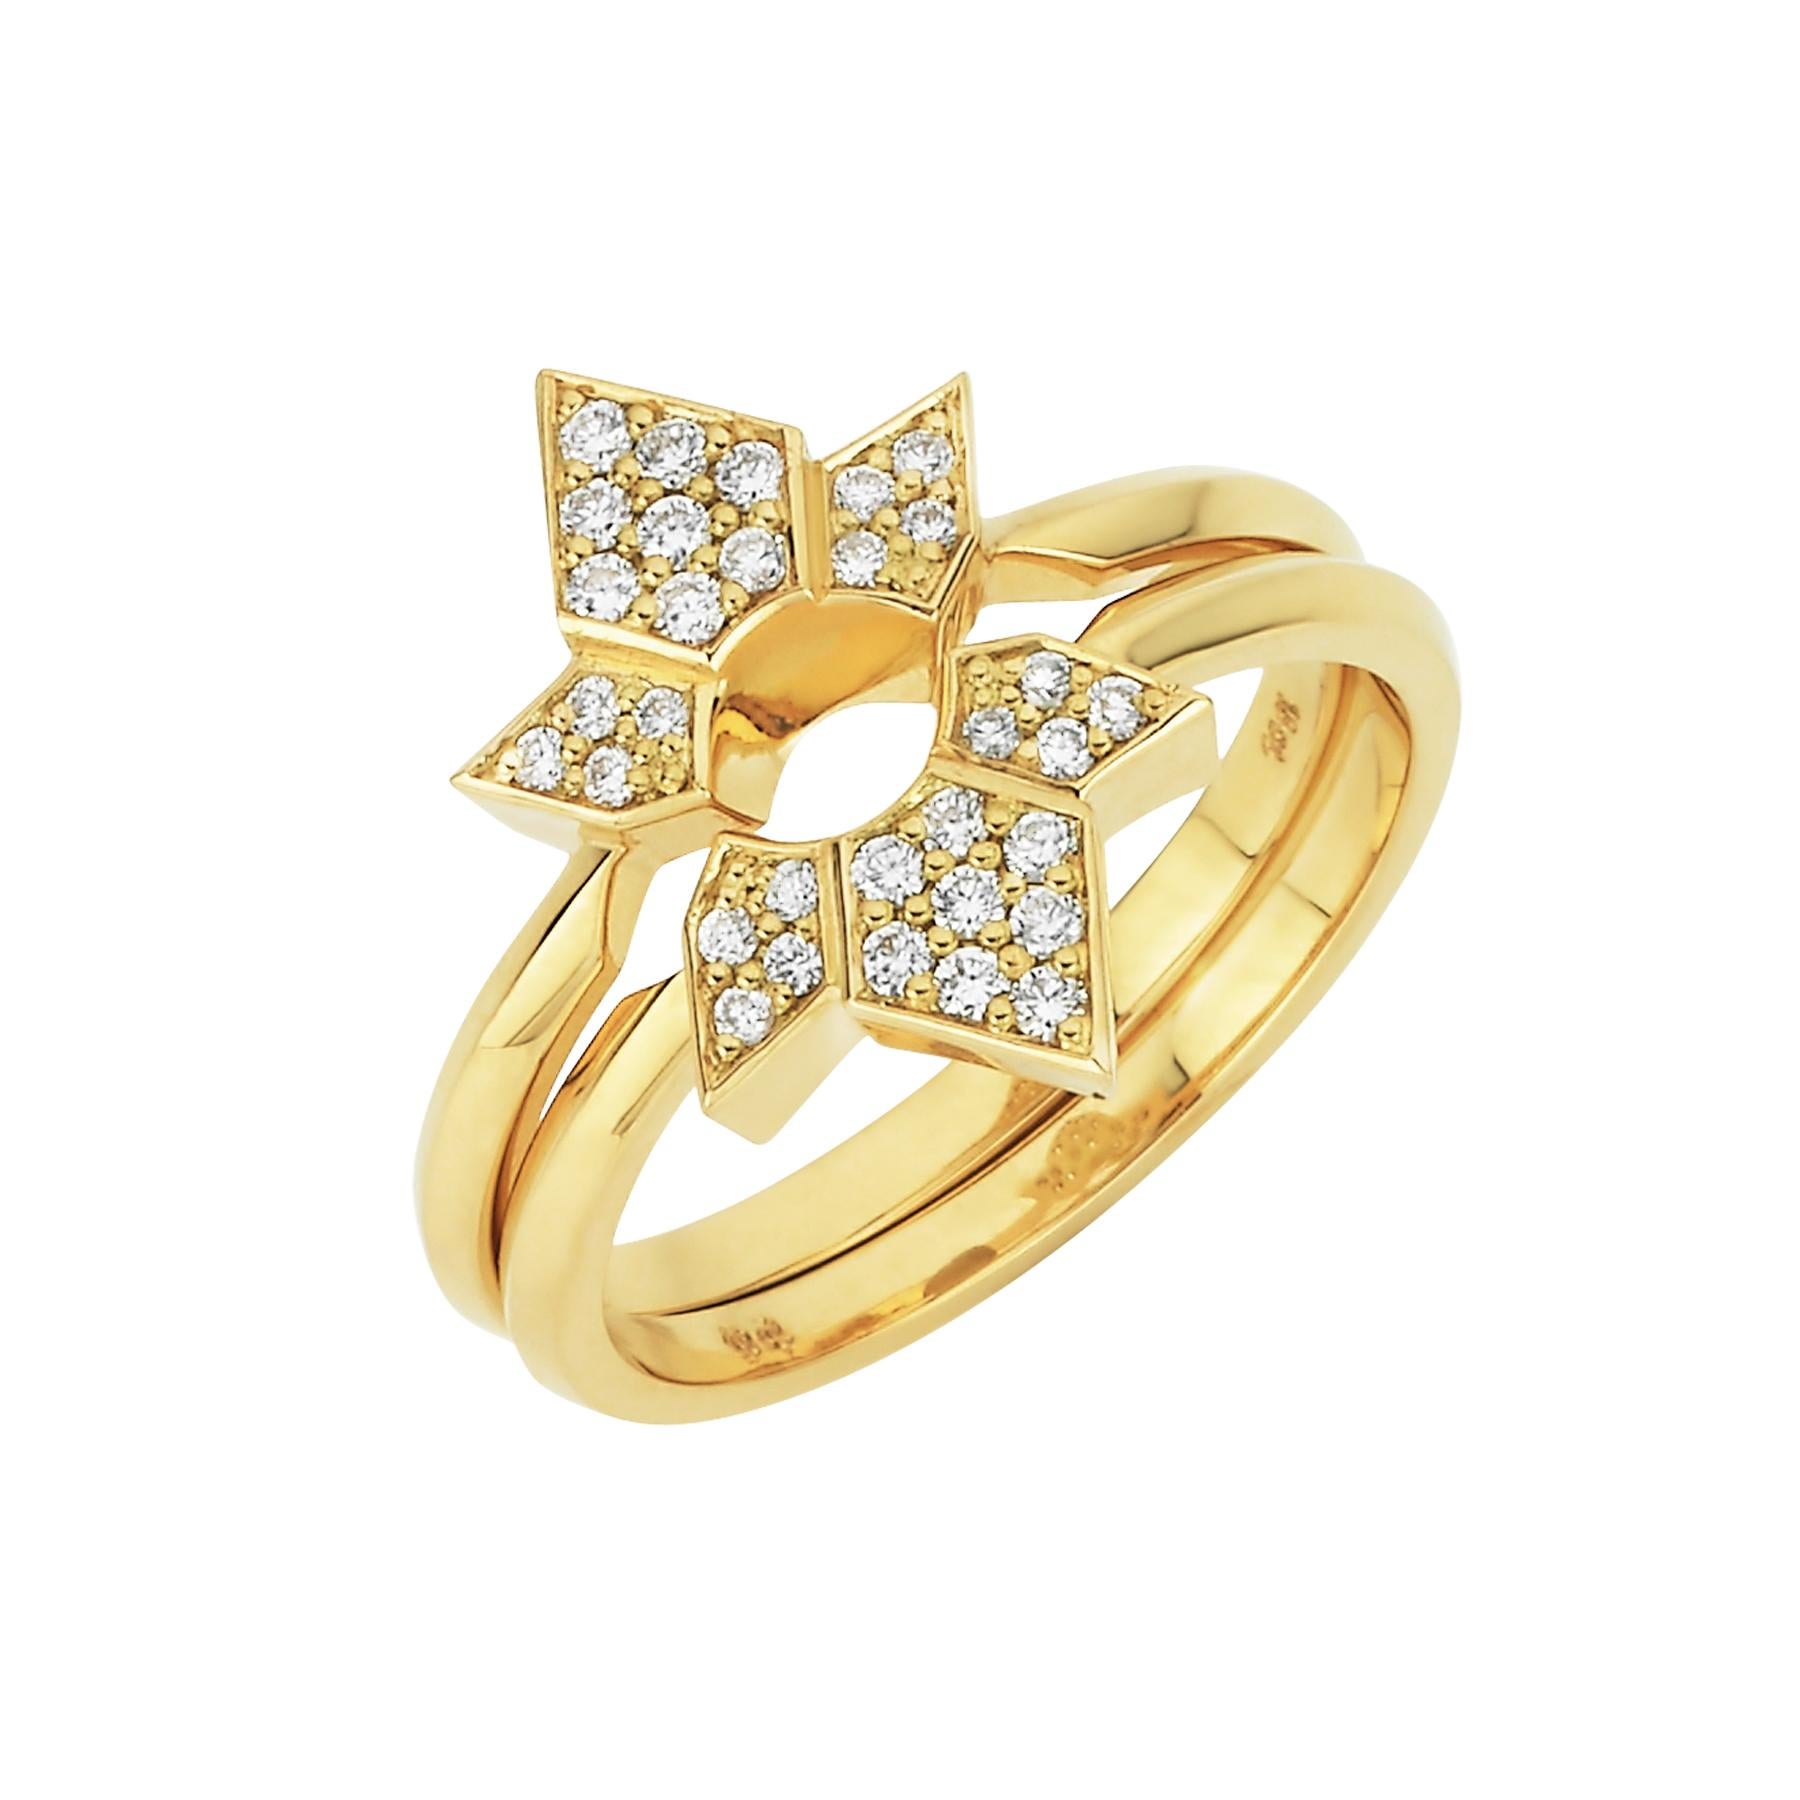 Zoe & Morgan Dahlia & Amara 18k Yellow Gold & Platinum Diamond Wedding Ring Set  In New Condition For Sale In London, GB